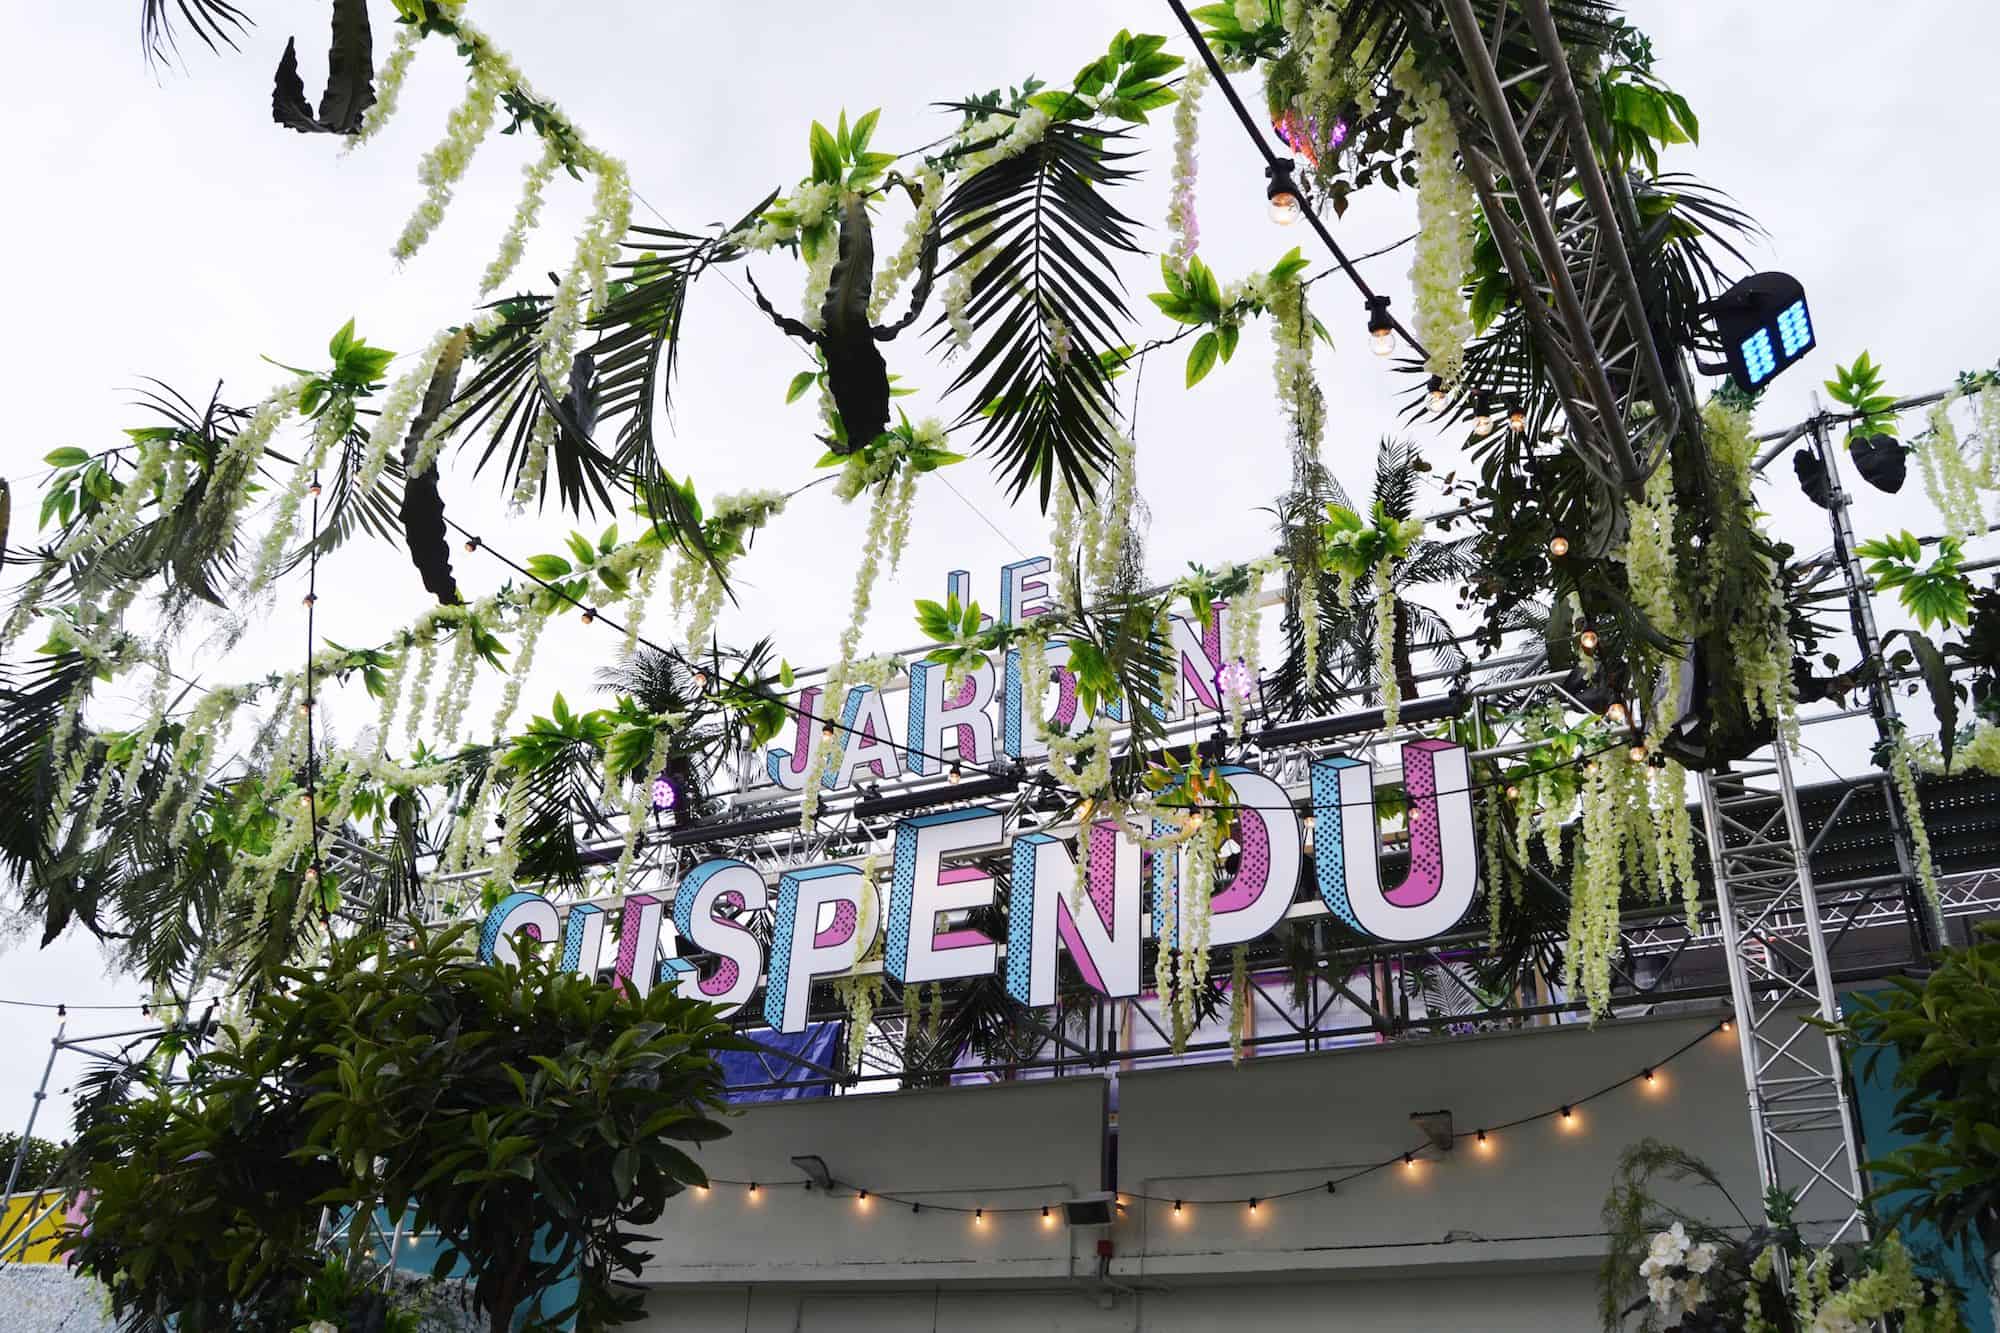 Paris rooftop bar Le Jardin Suspendu (the hanging garden) name adorned with leafy decor.